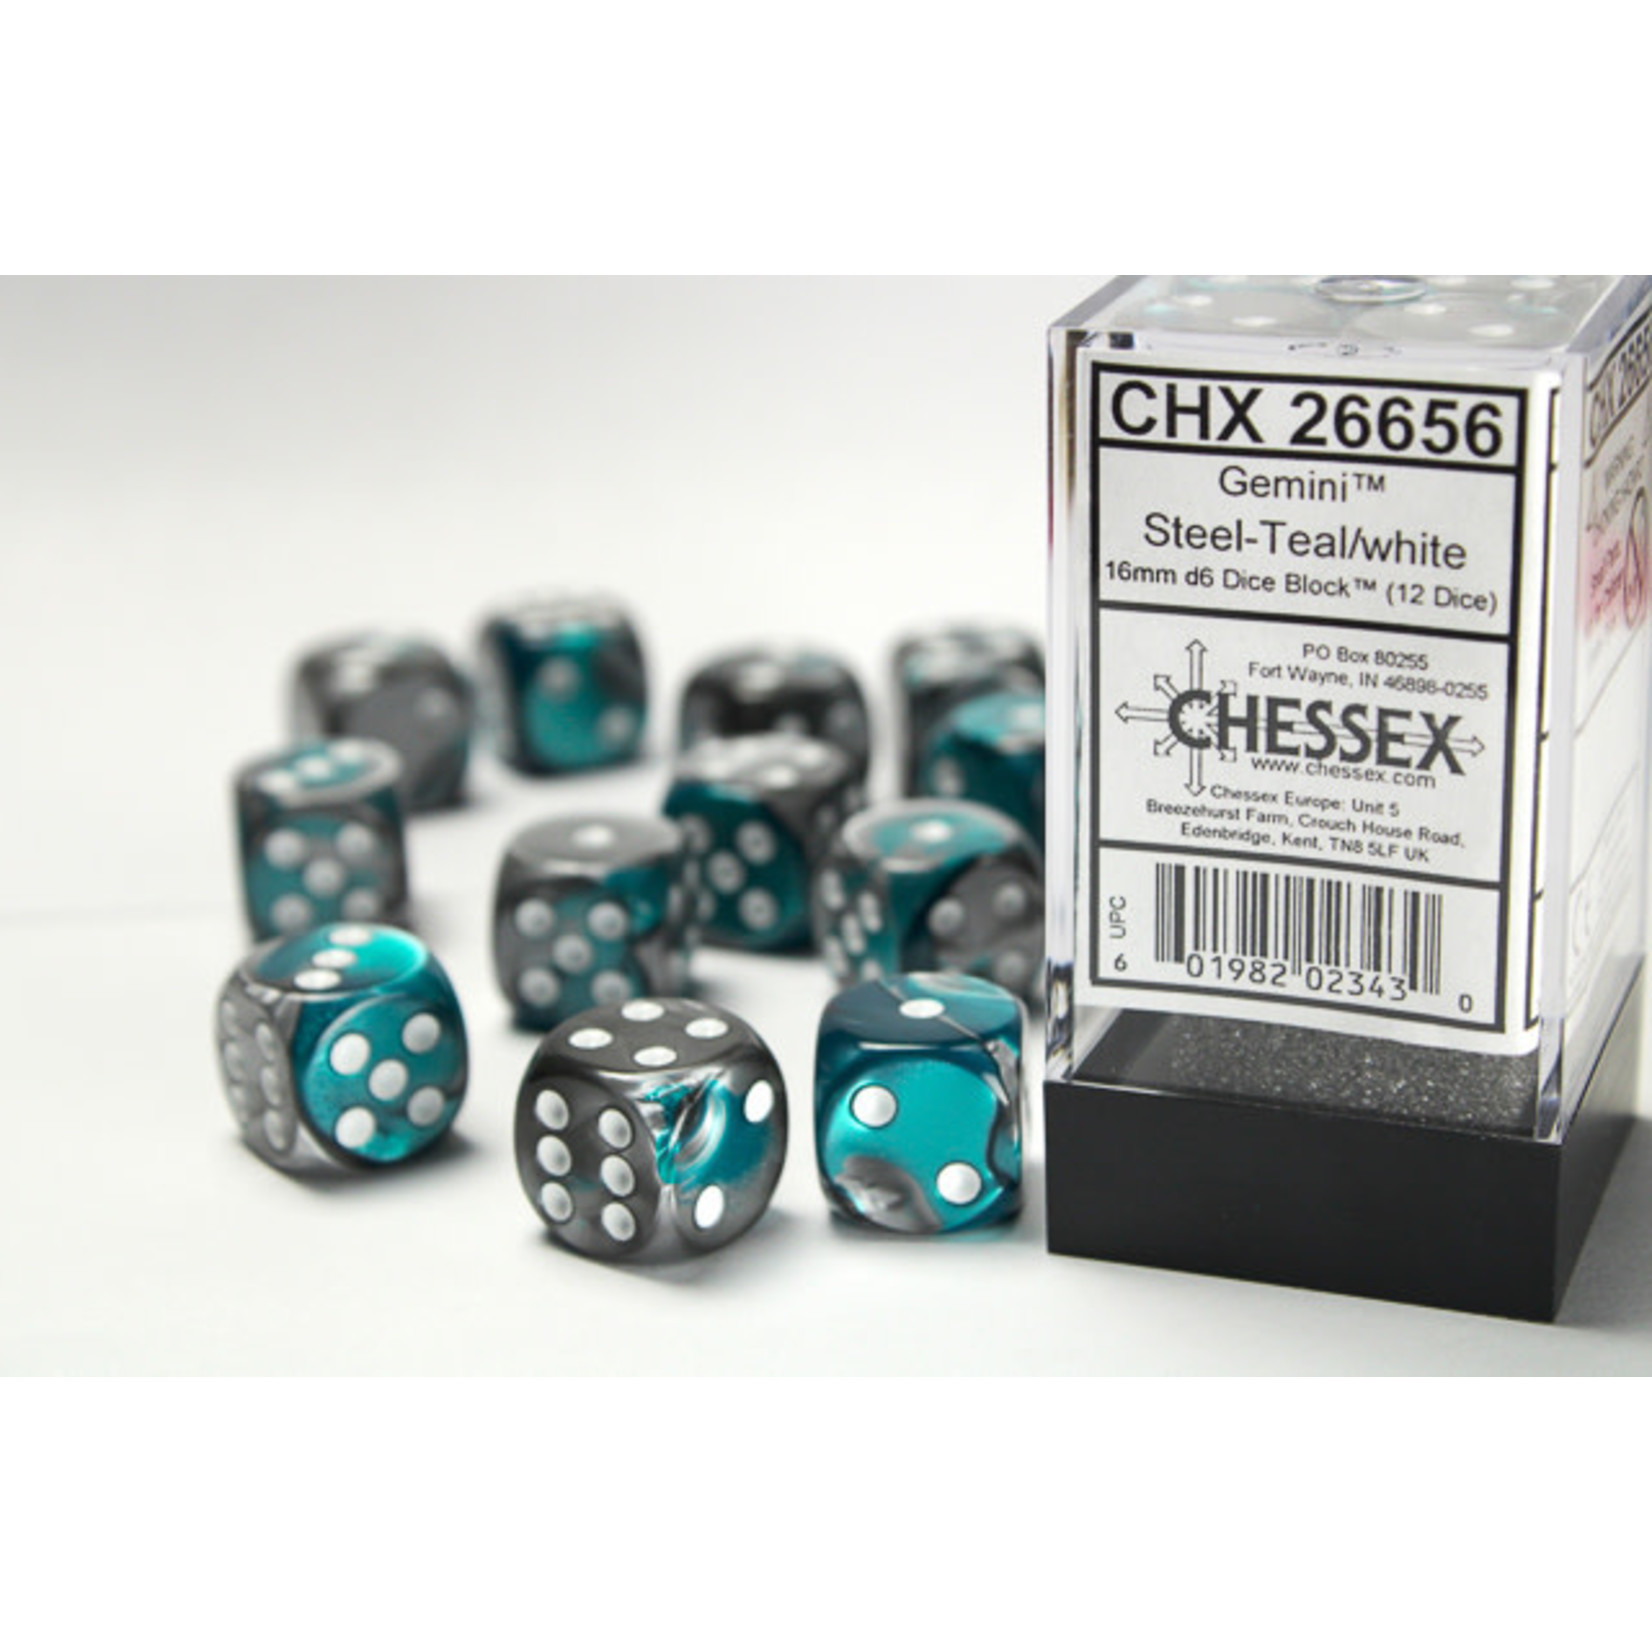 Chessex Dice 16mm 26656 12pc Gemini Steel-Teal/White